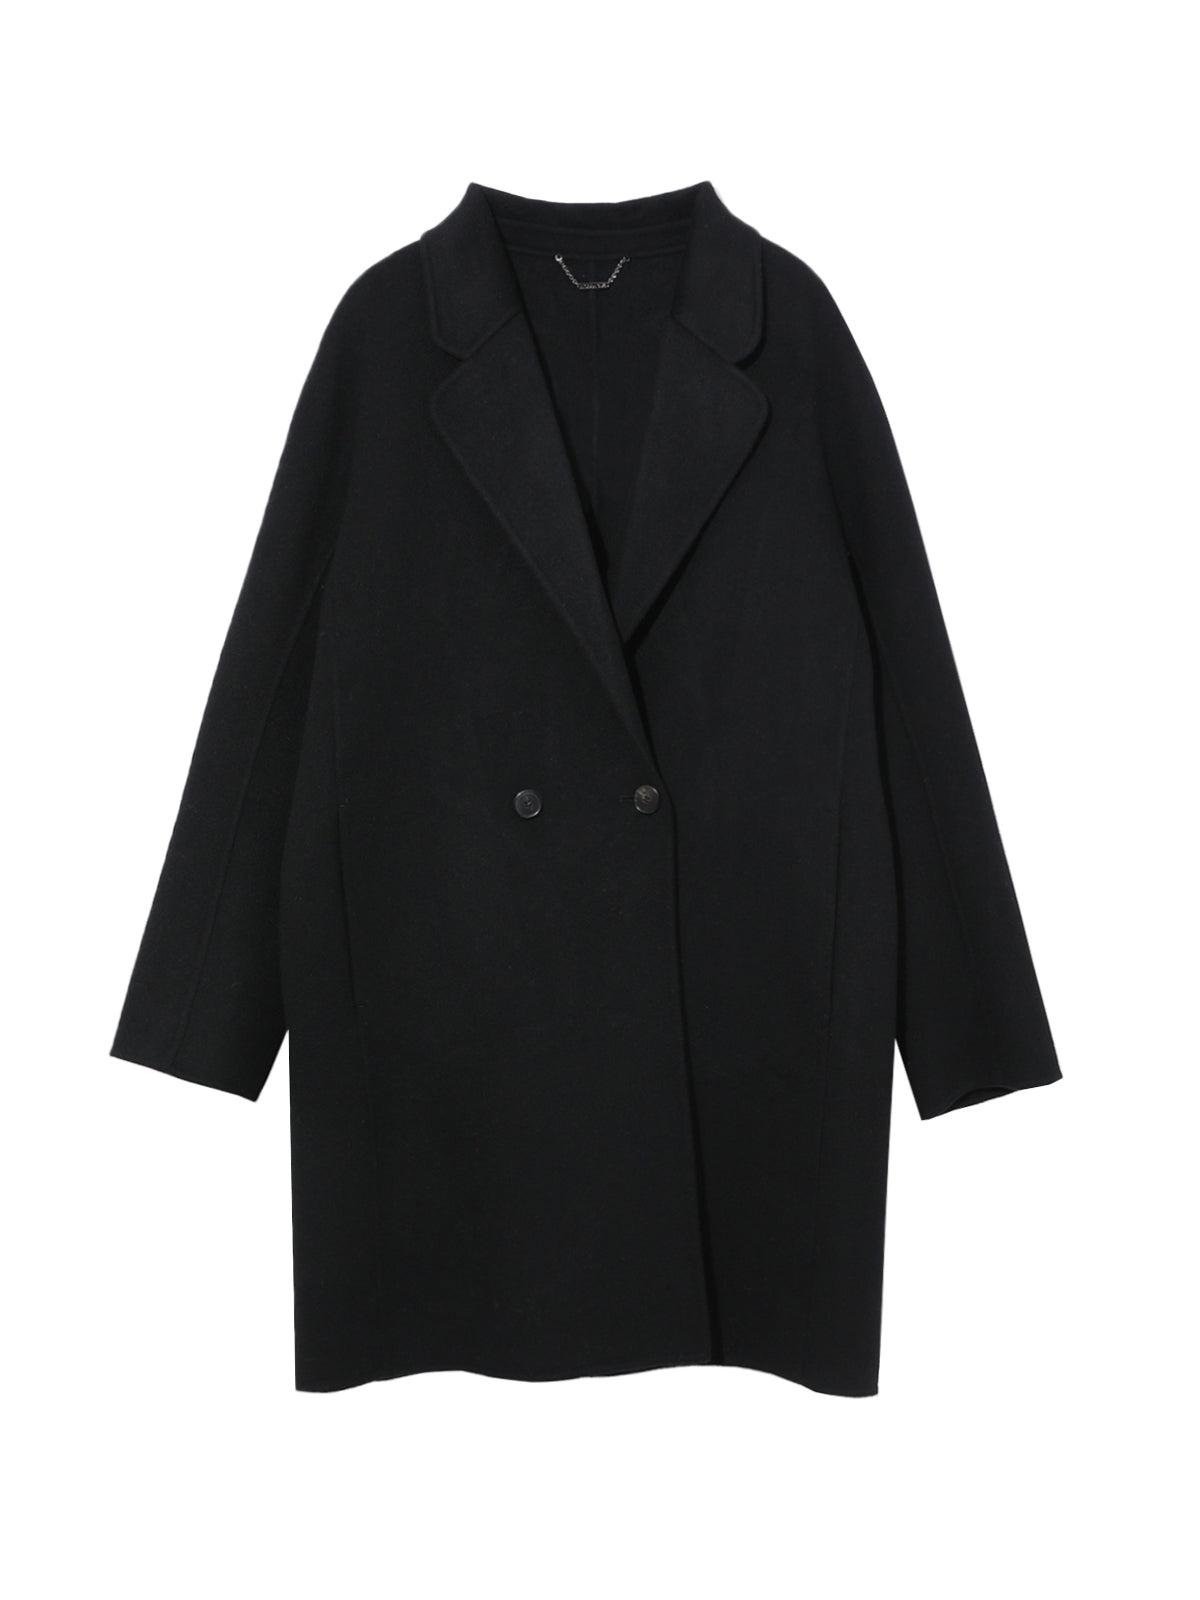 NORAH SUE 100% Cashmere Coat by COCKTAIL